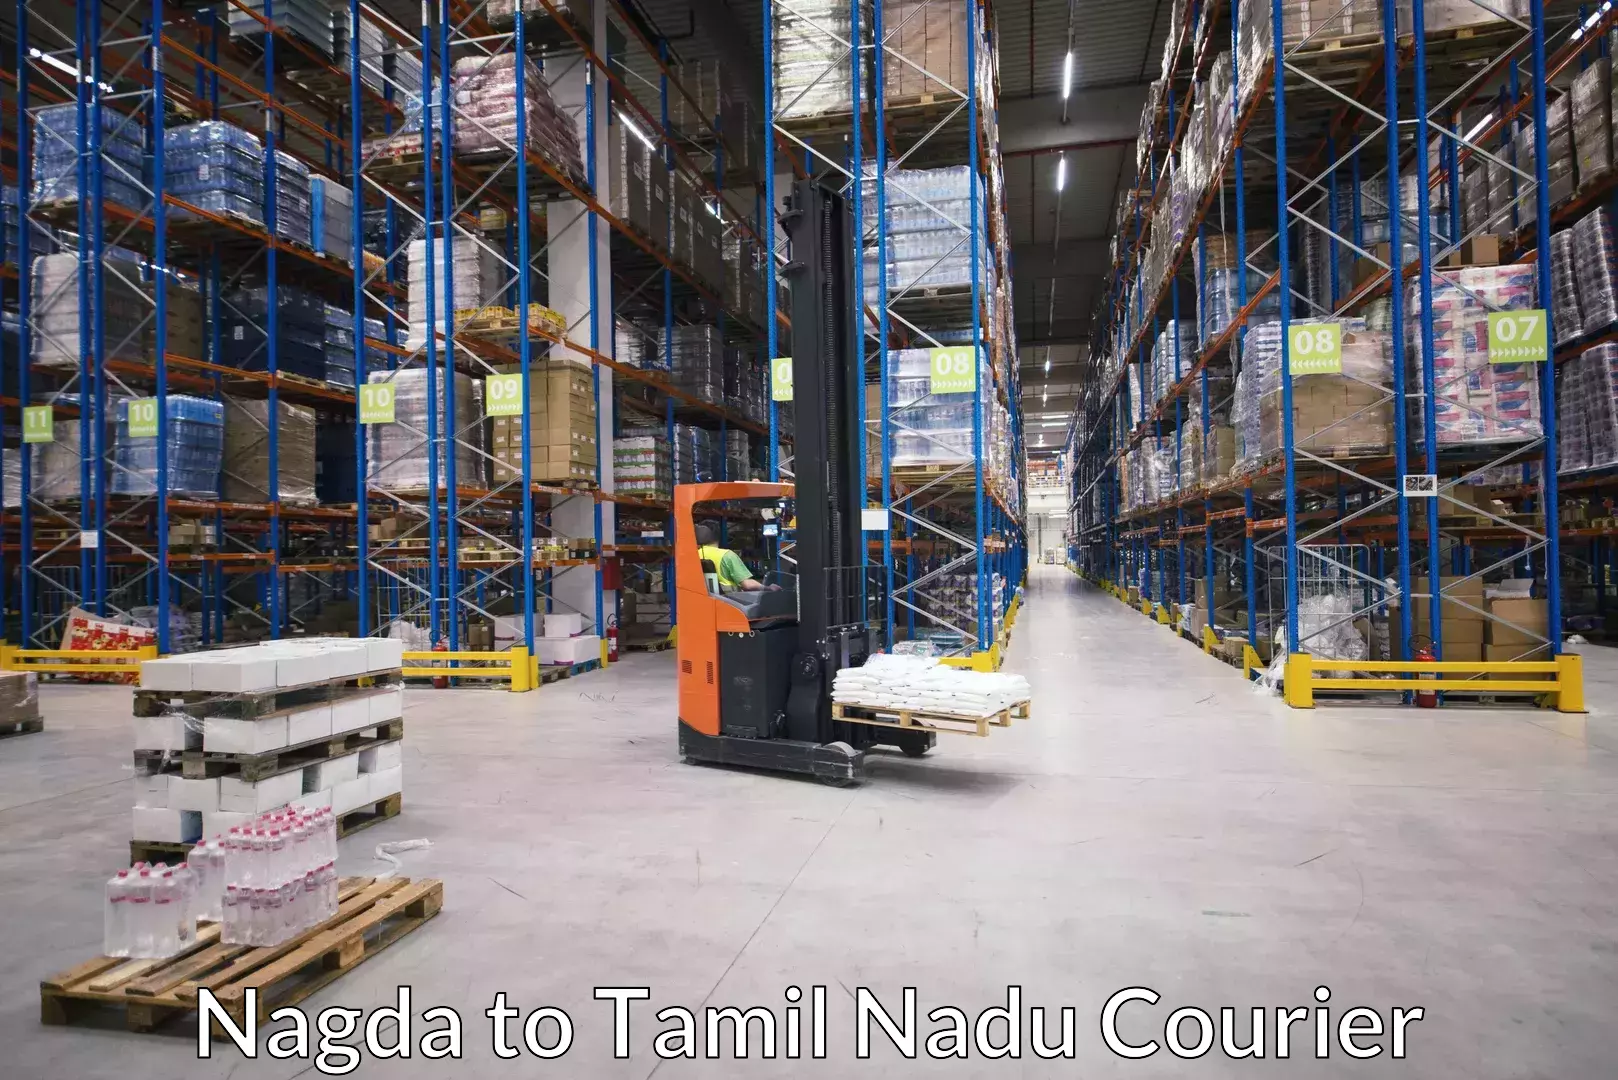 Same day luggage service Nagda to Tamil Nadu